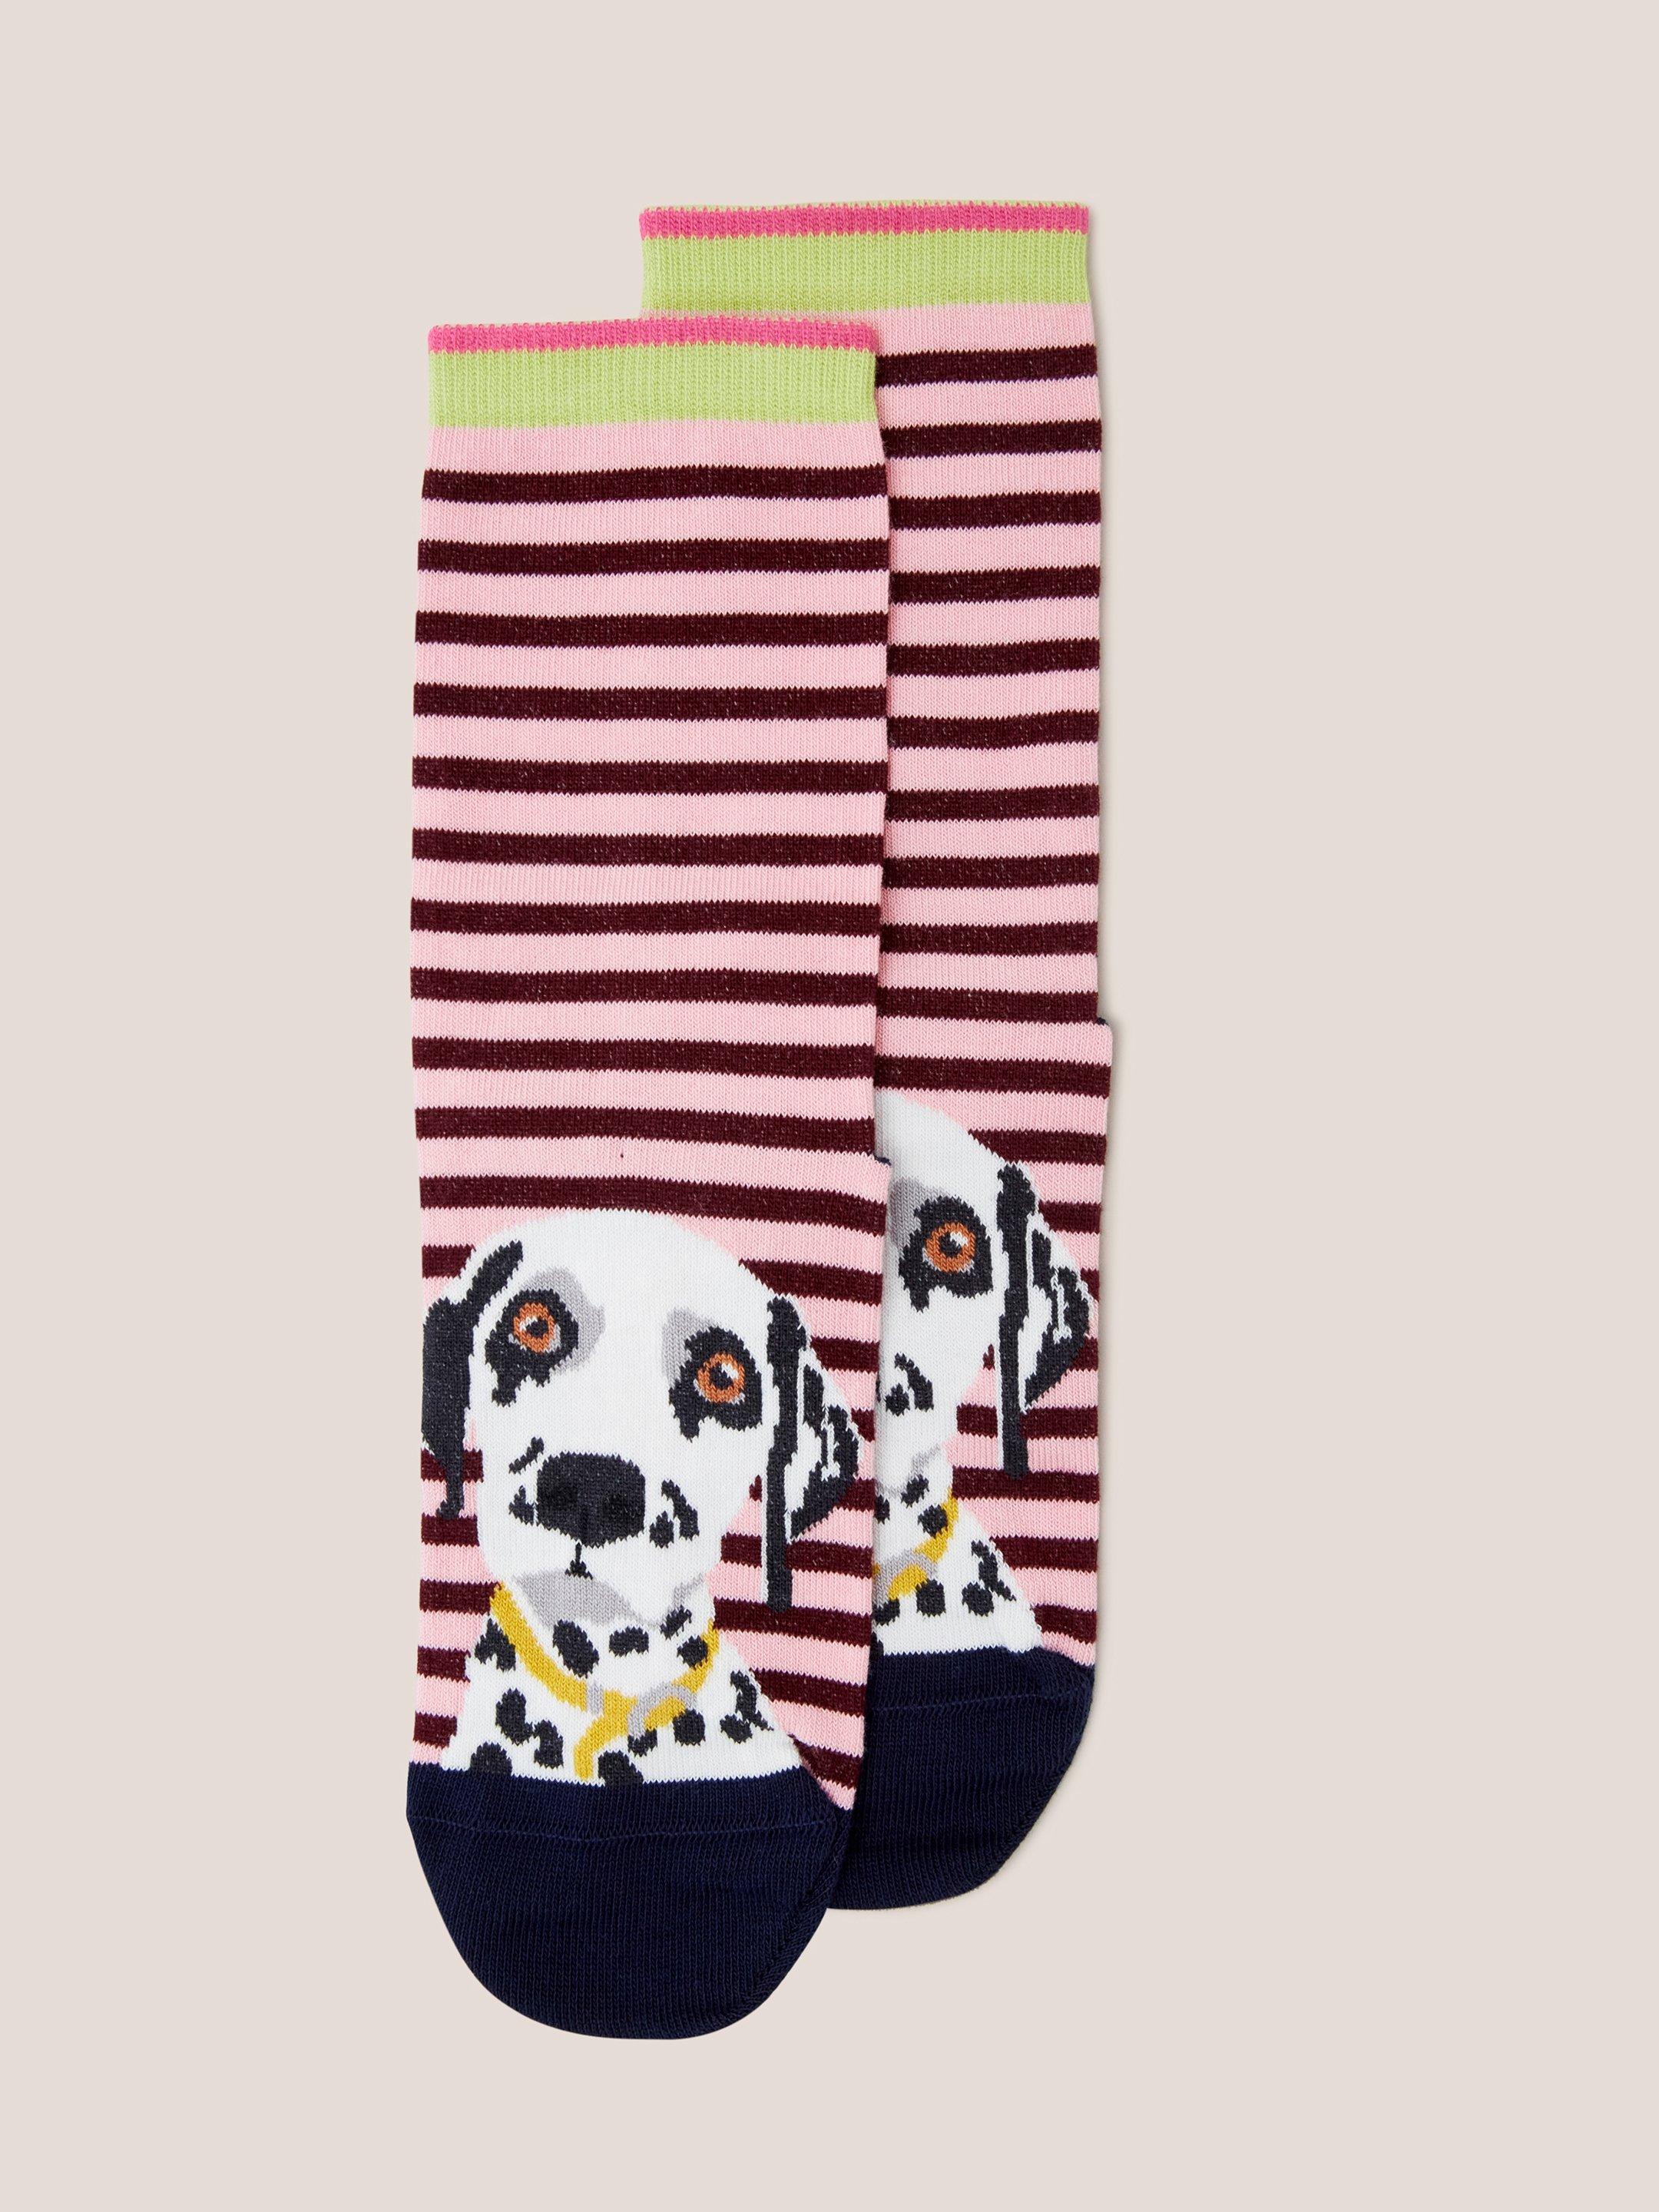 Dalmatian Stripe Ankle Sock in PINK MLT - FLAT FRONT